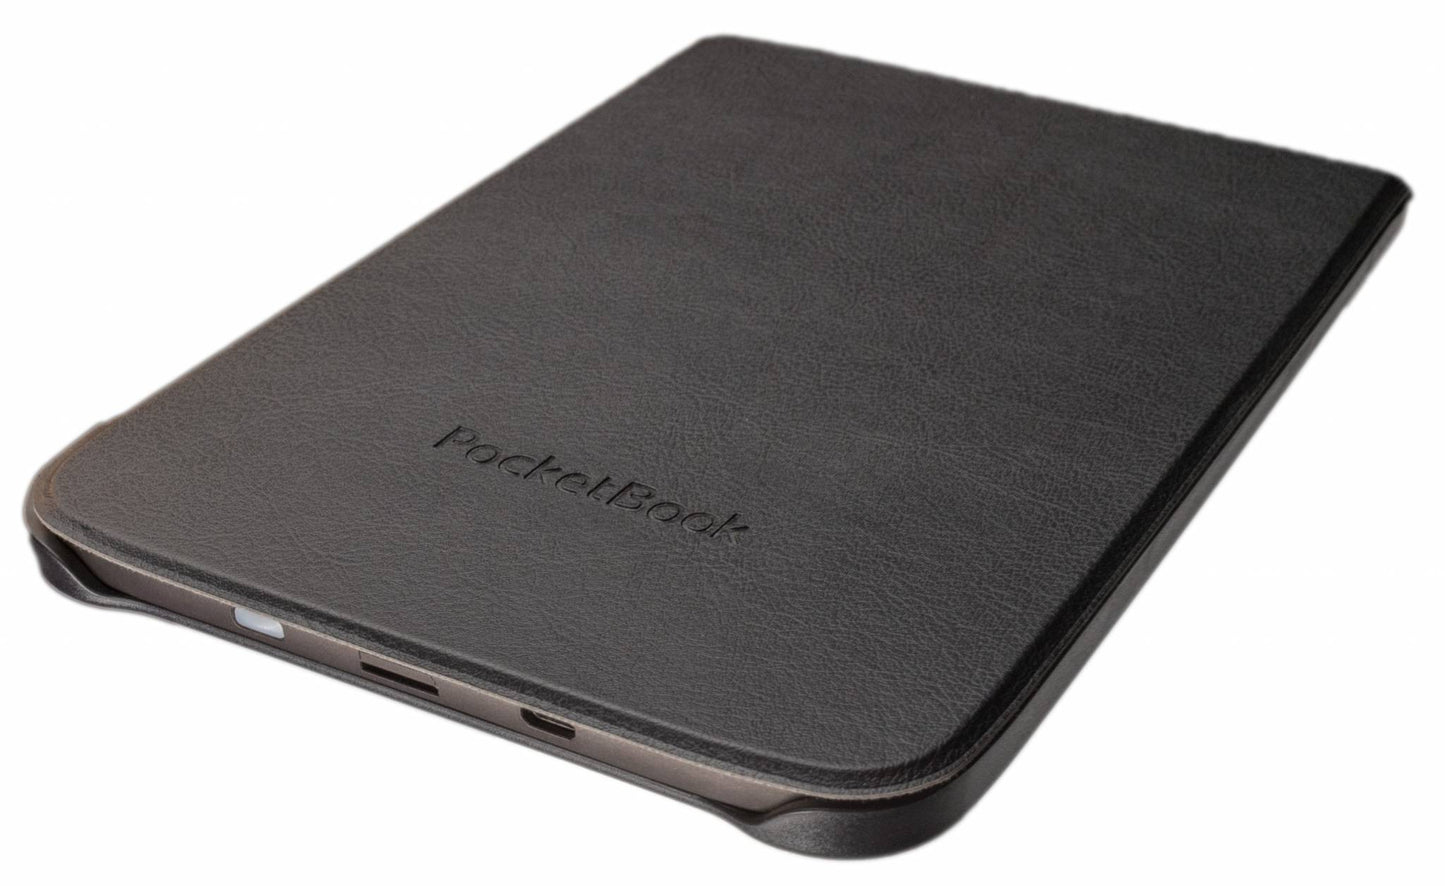 Pocketbook Inkpad 3 Leather Case